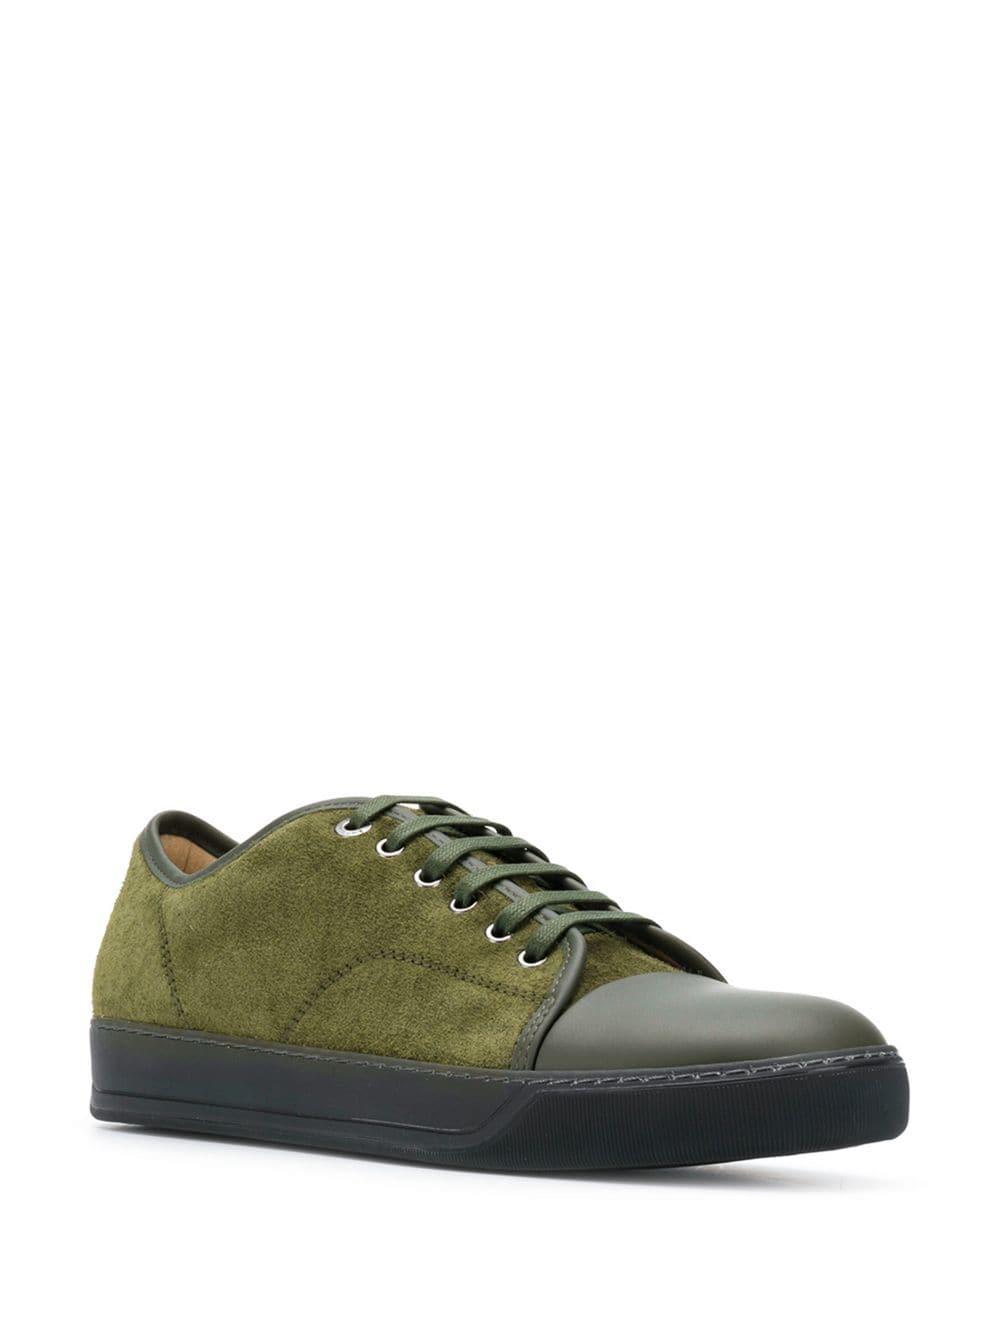 Lyst - Lanvin Toe-capped Sneakers in Green for Men